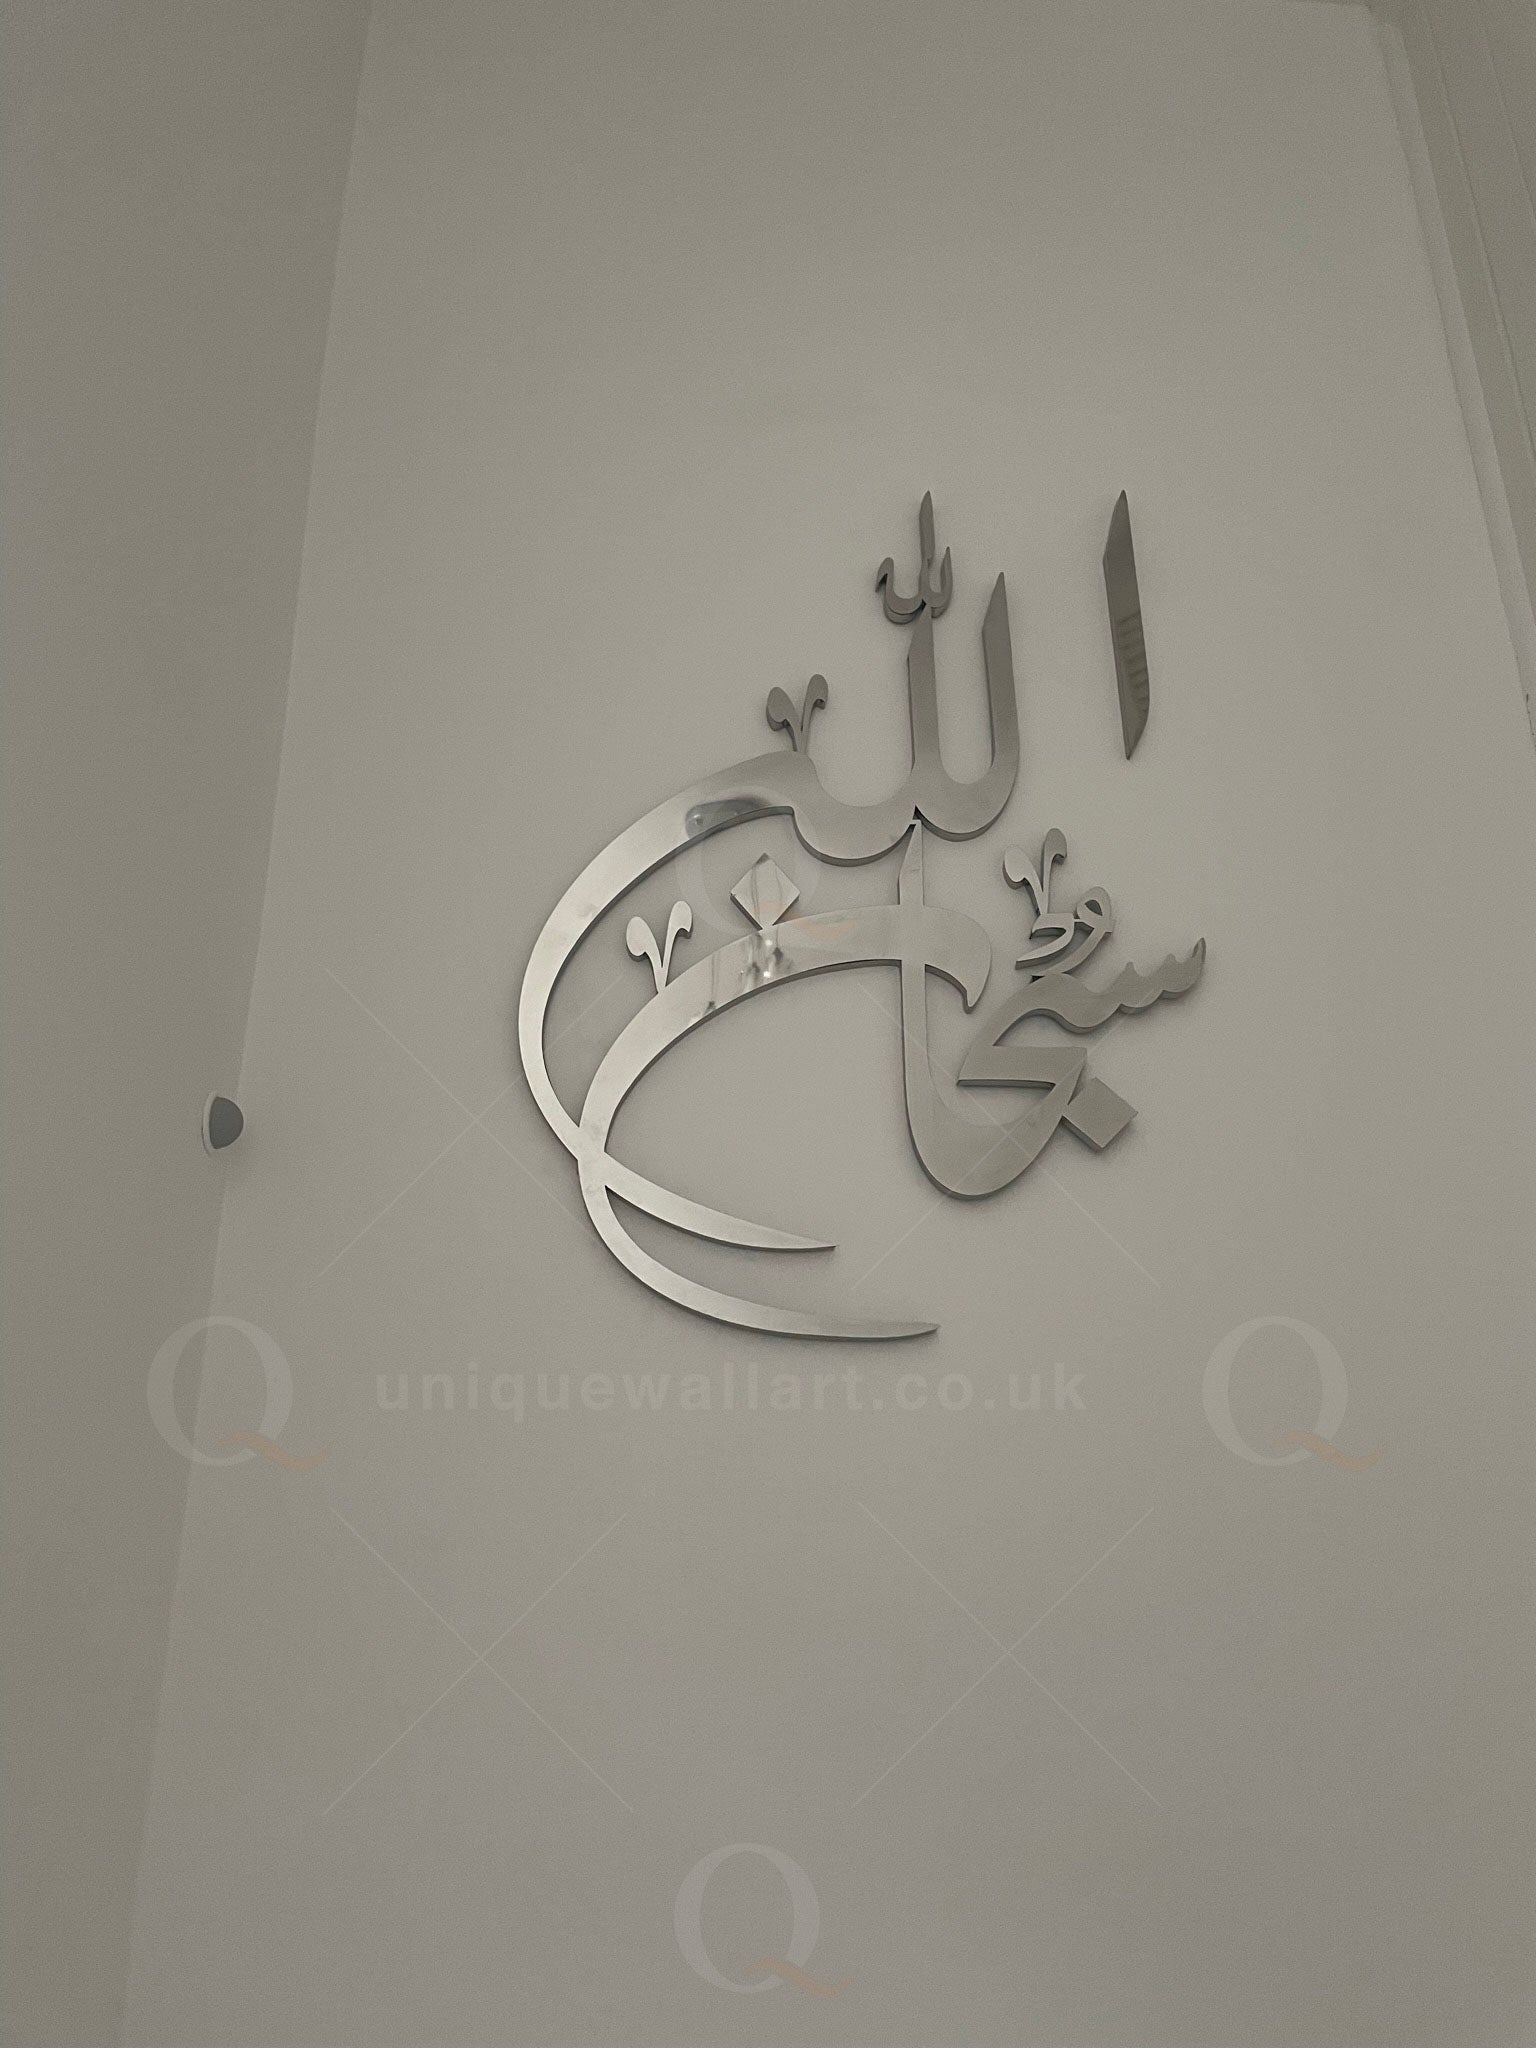 SubhanAllah 3D Stainless Steel Islamic Calligraphy Wall Art